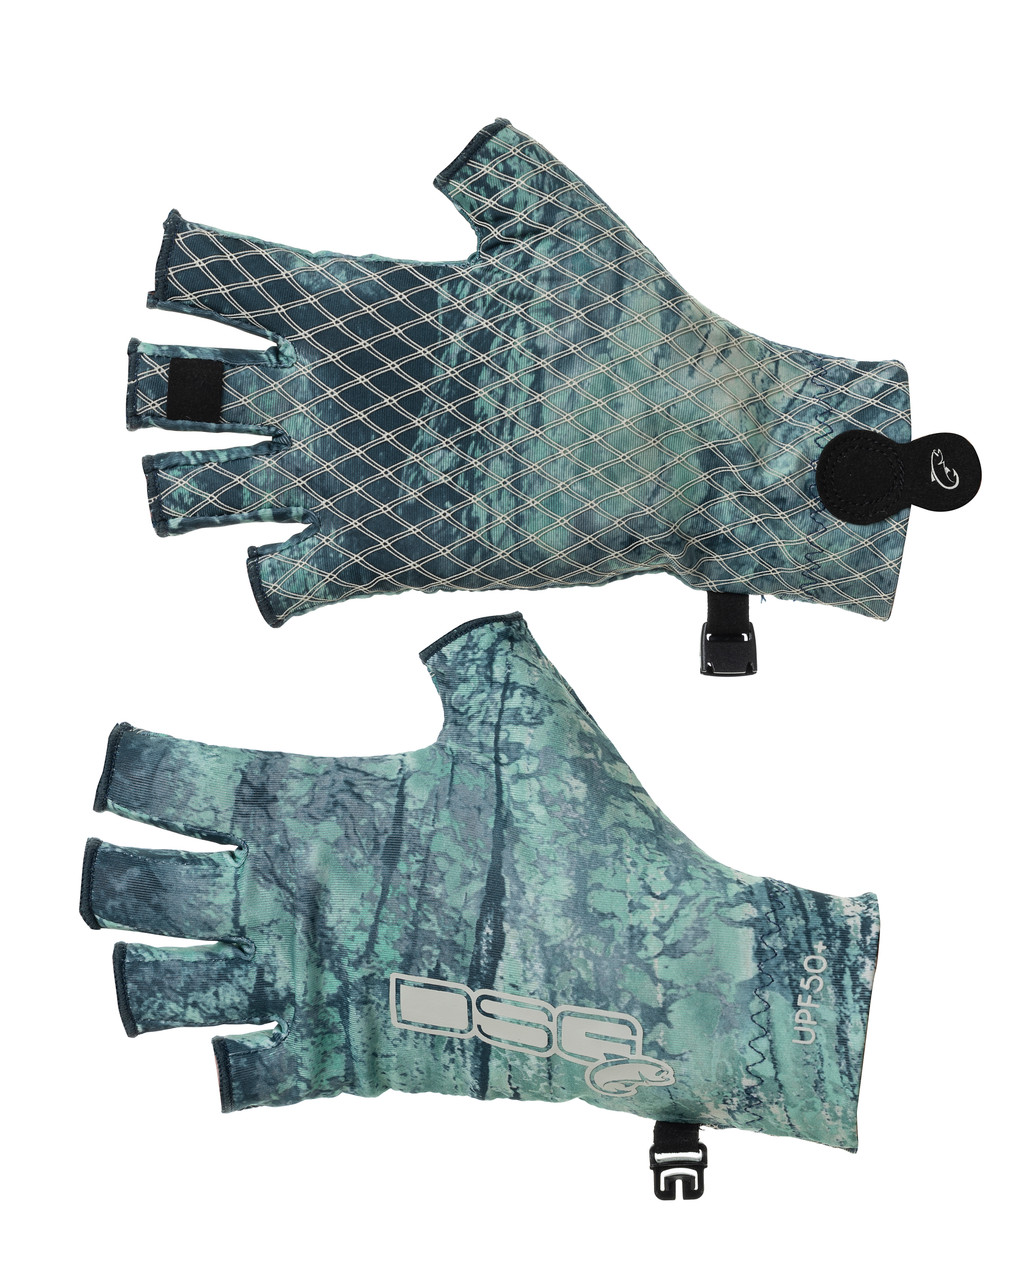 DSG Jordy Gloves RT Aspect River Bend / LG